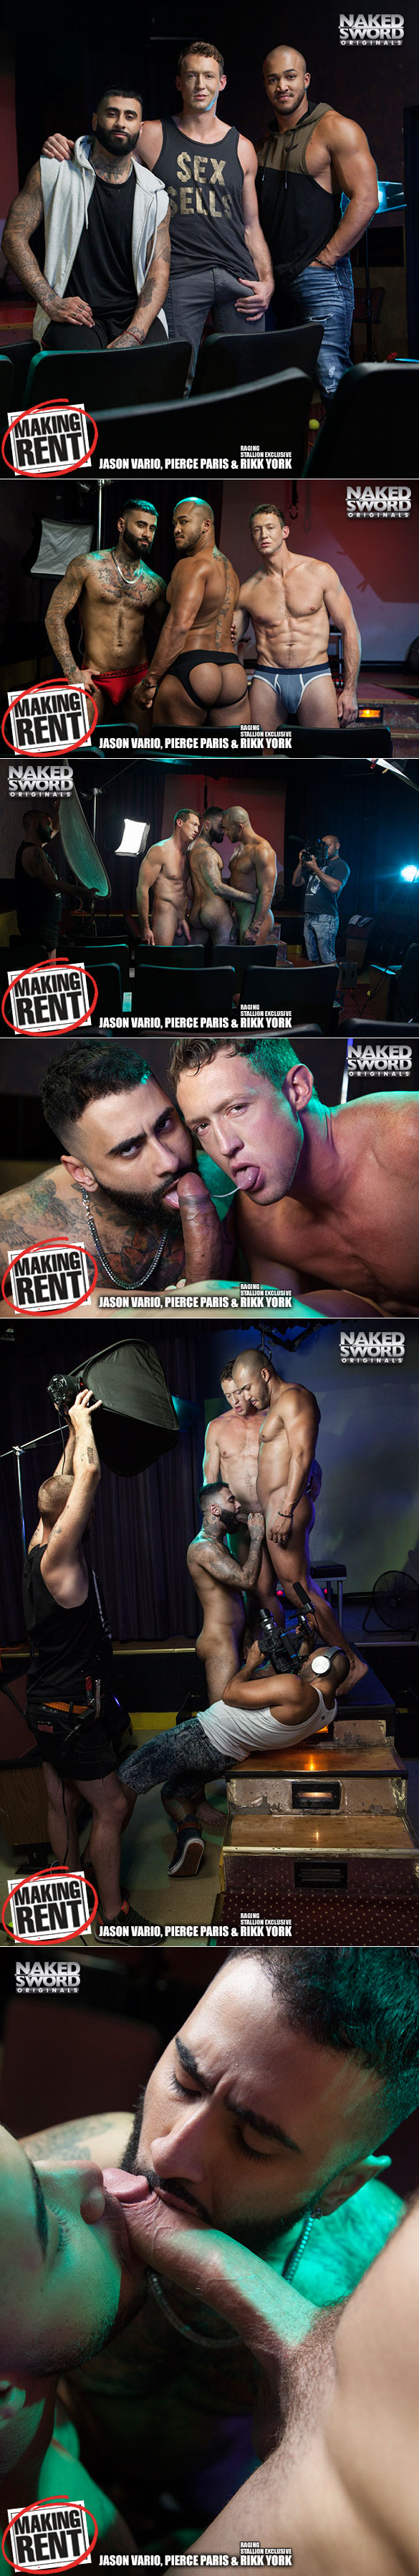 NakedSword Originals: Jason Vario, Pierce Paris and Rikk York's hot threeway in "Making Rent"